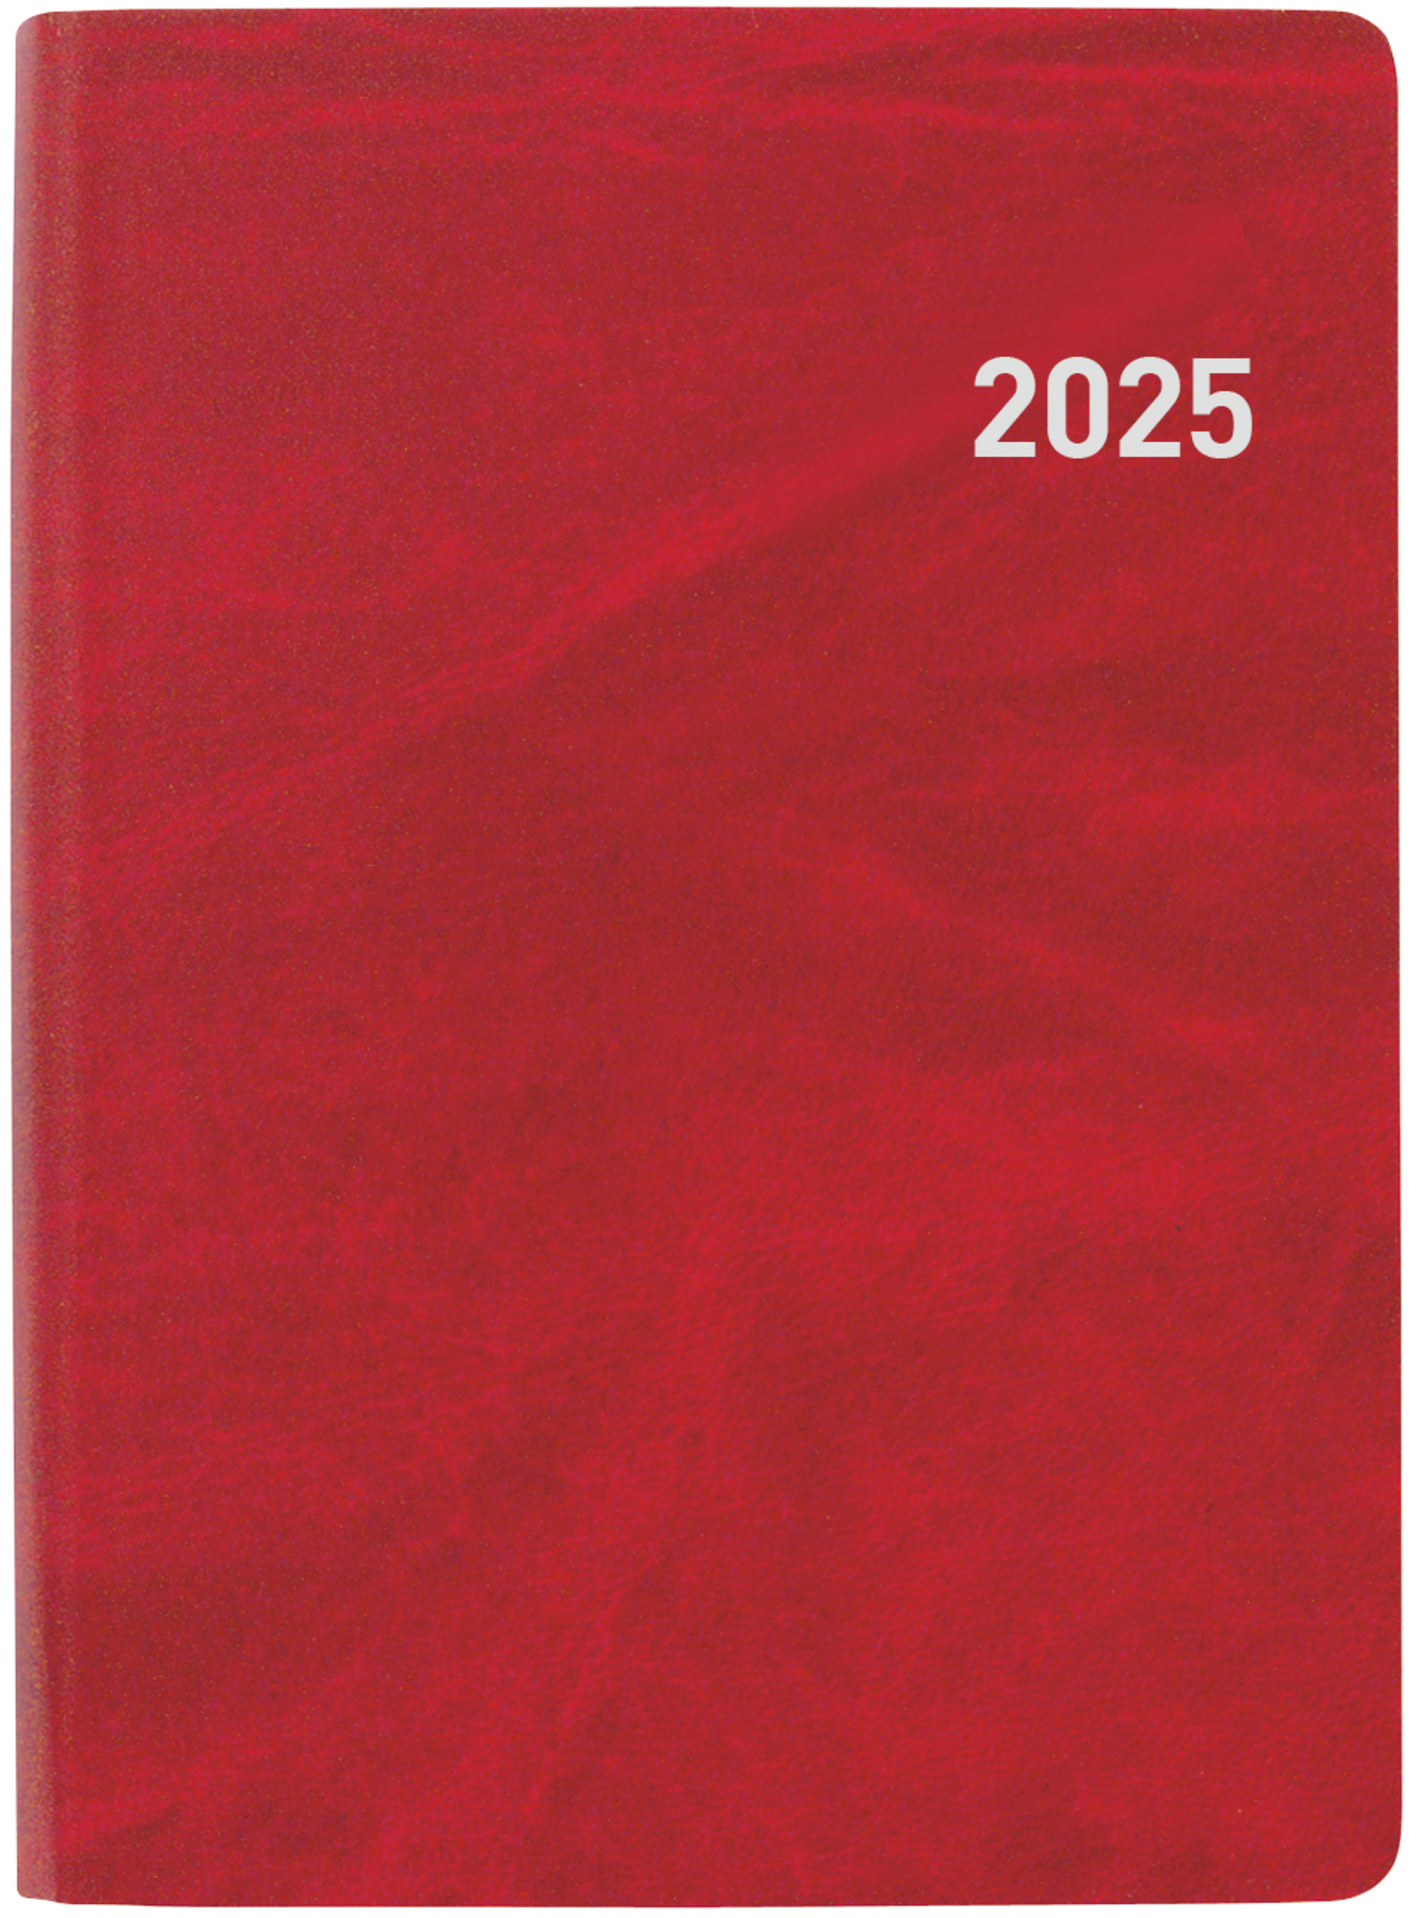 BIELLA Agenda Rex 2025 825301450025 1S/2P rouge ML 10.1x14.2cm